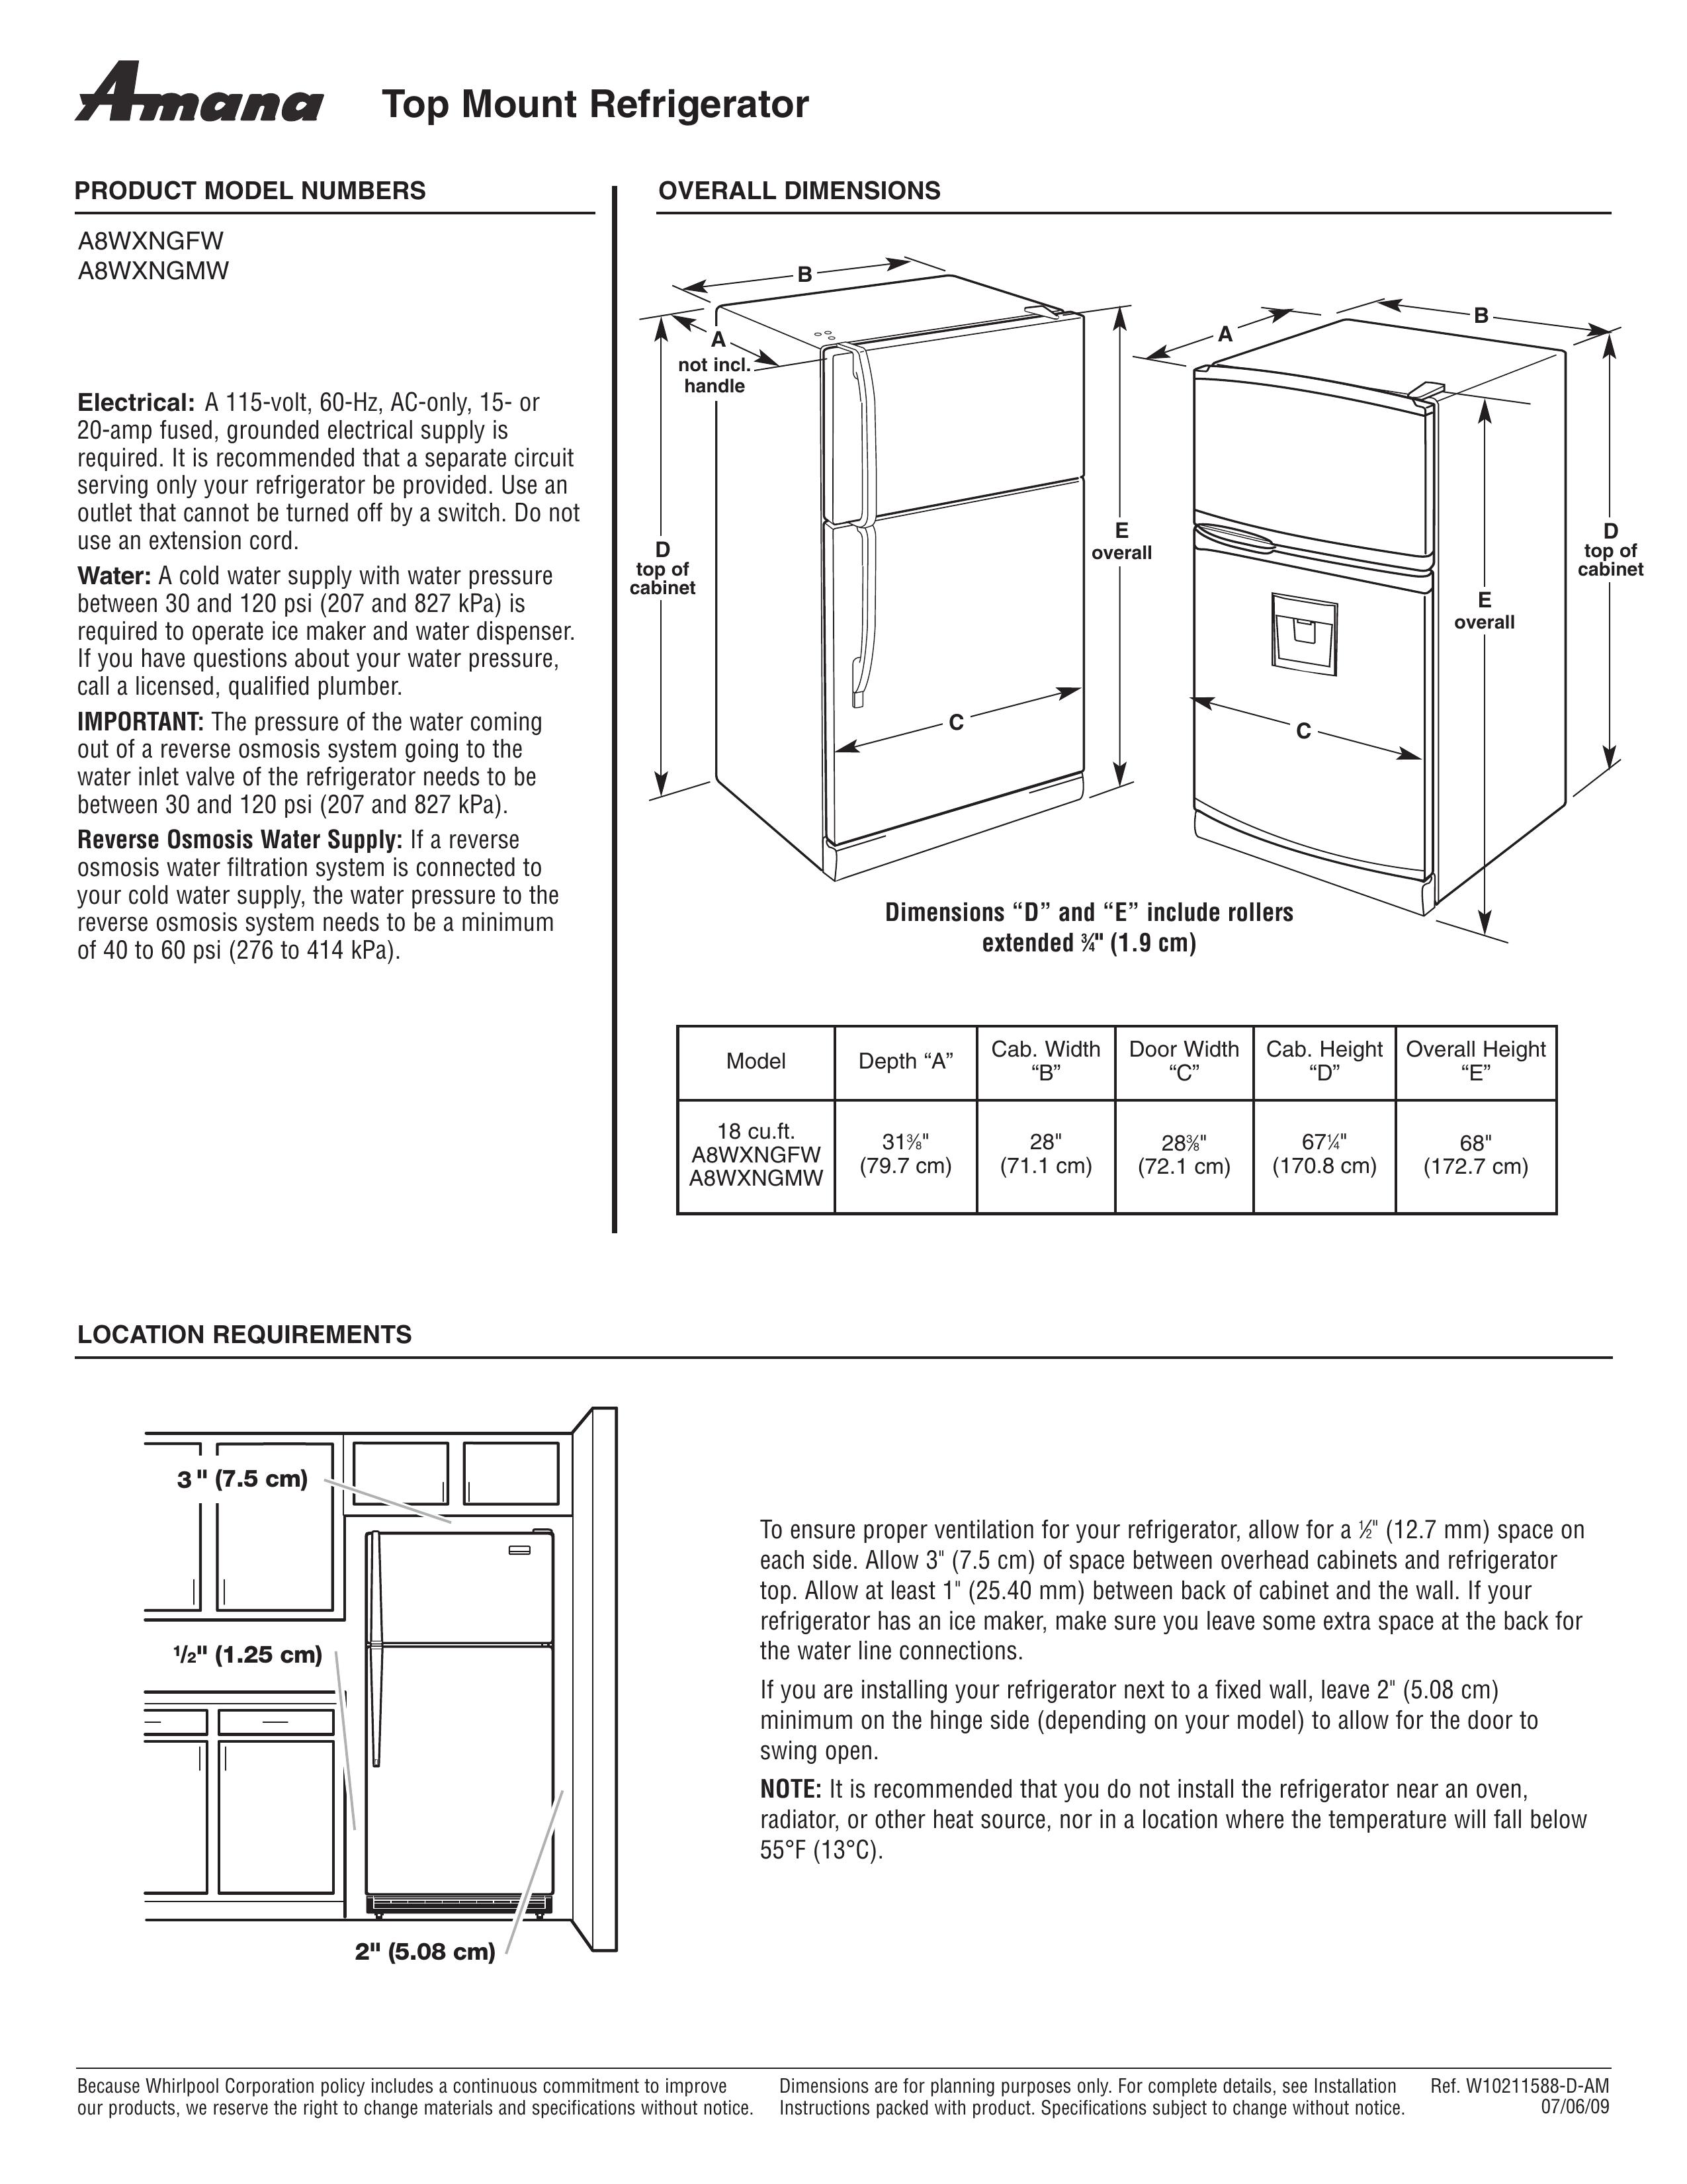 Amana A8WXNGMW Refrigerator User Manual